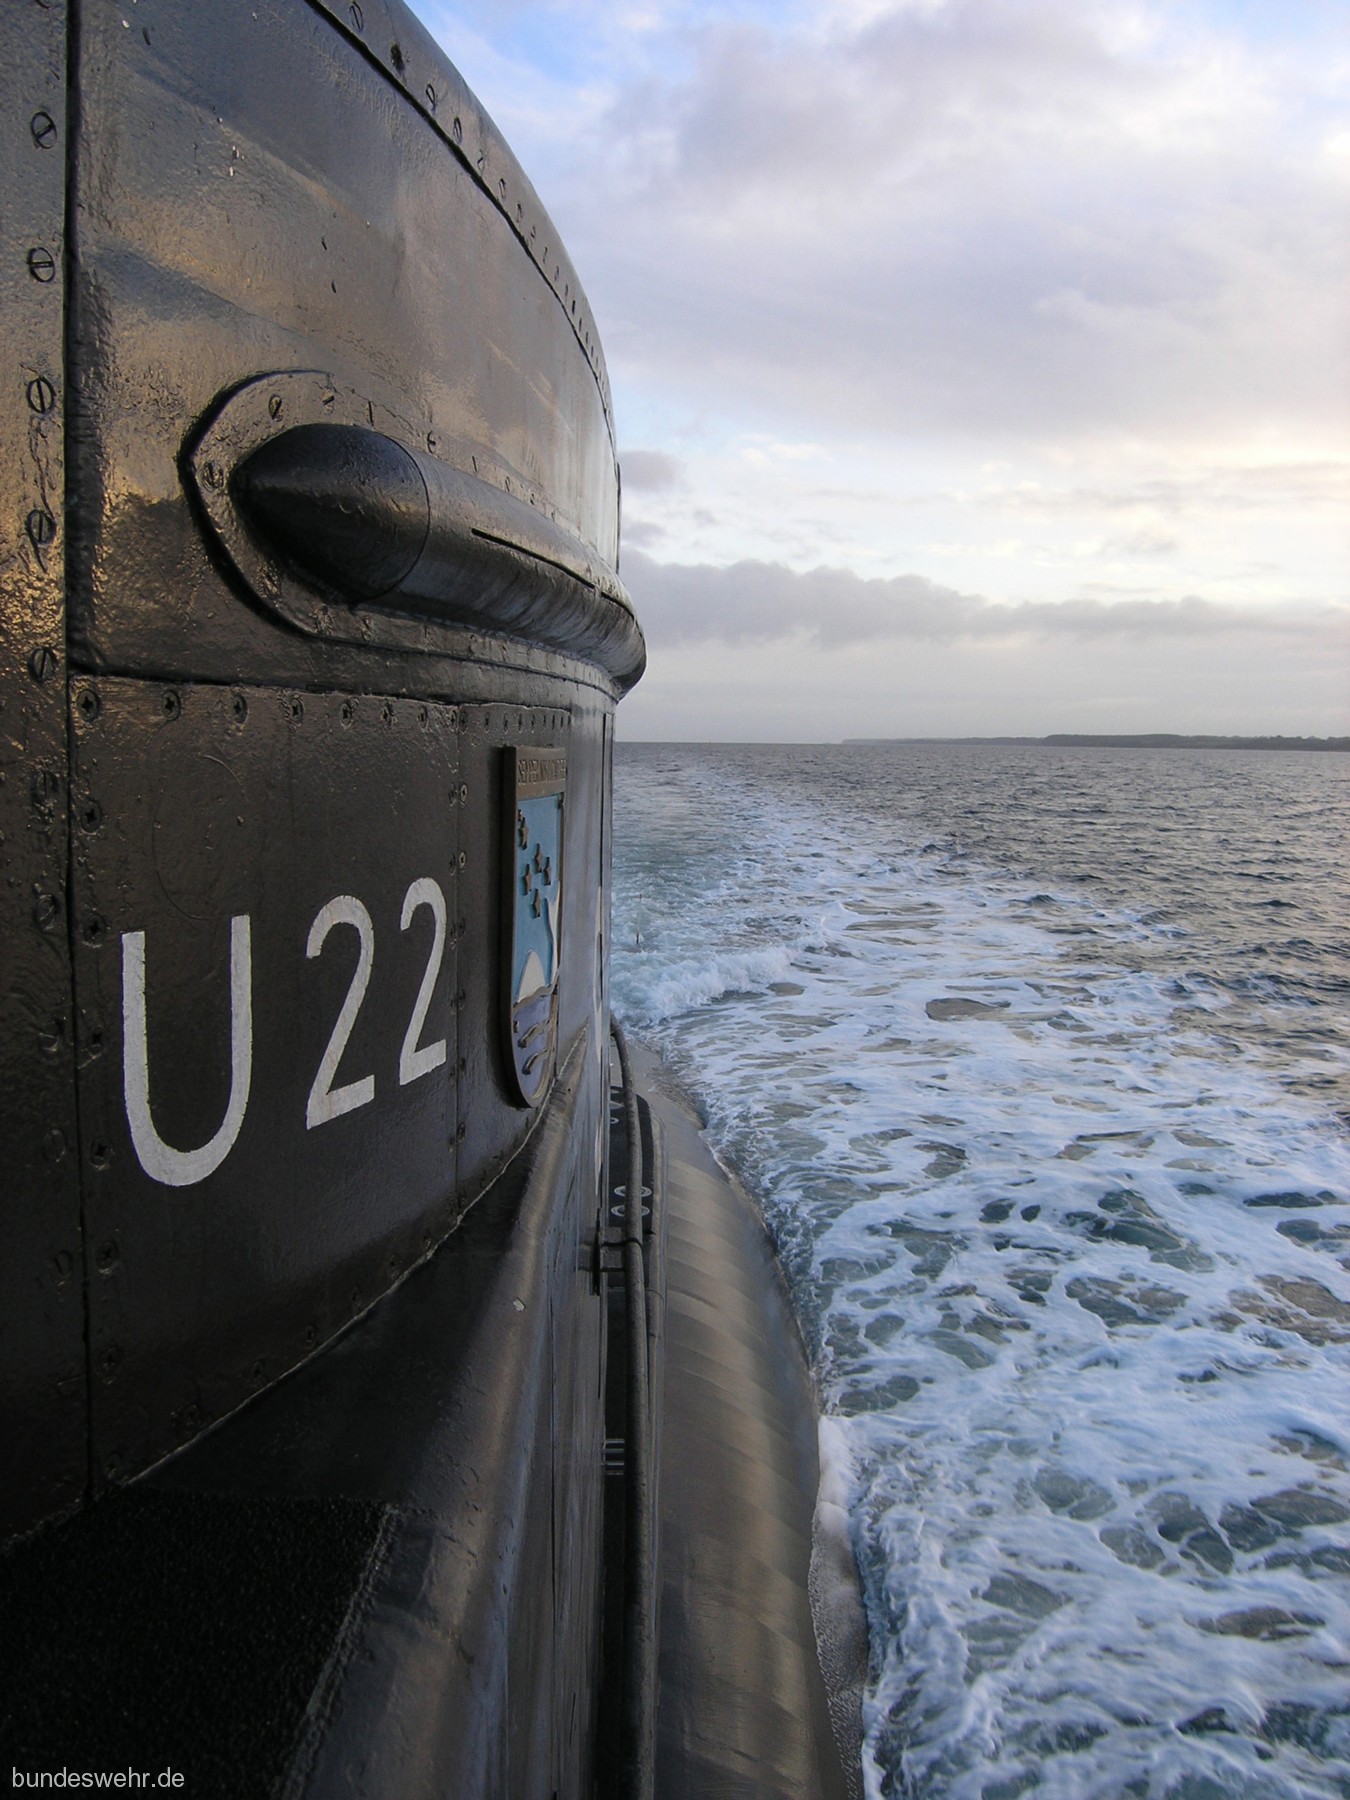 s-171 fgs u22 type 206 class submarine german navy 03